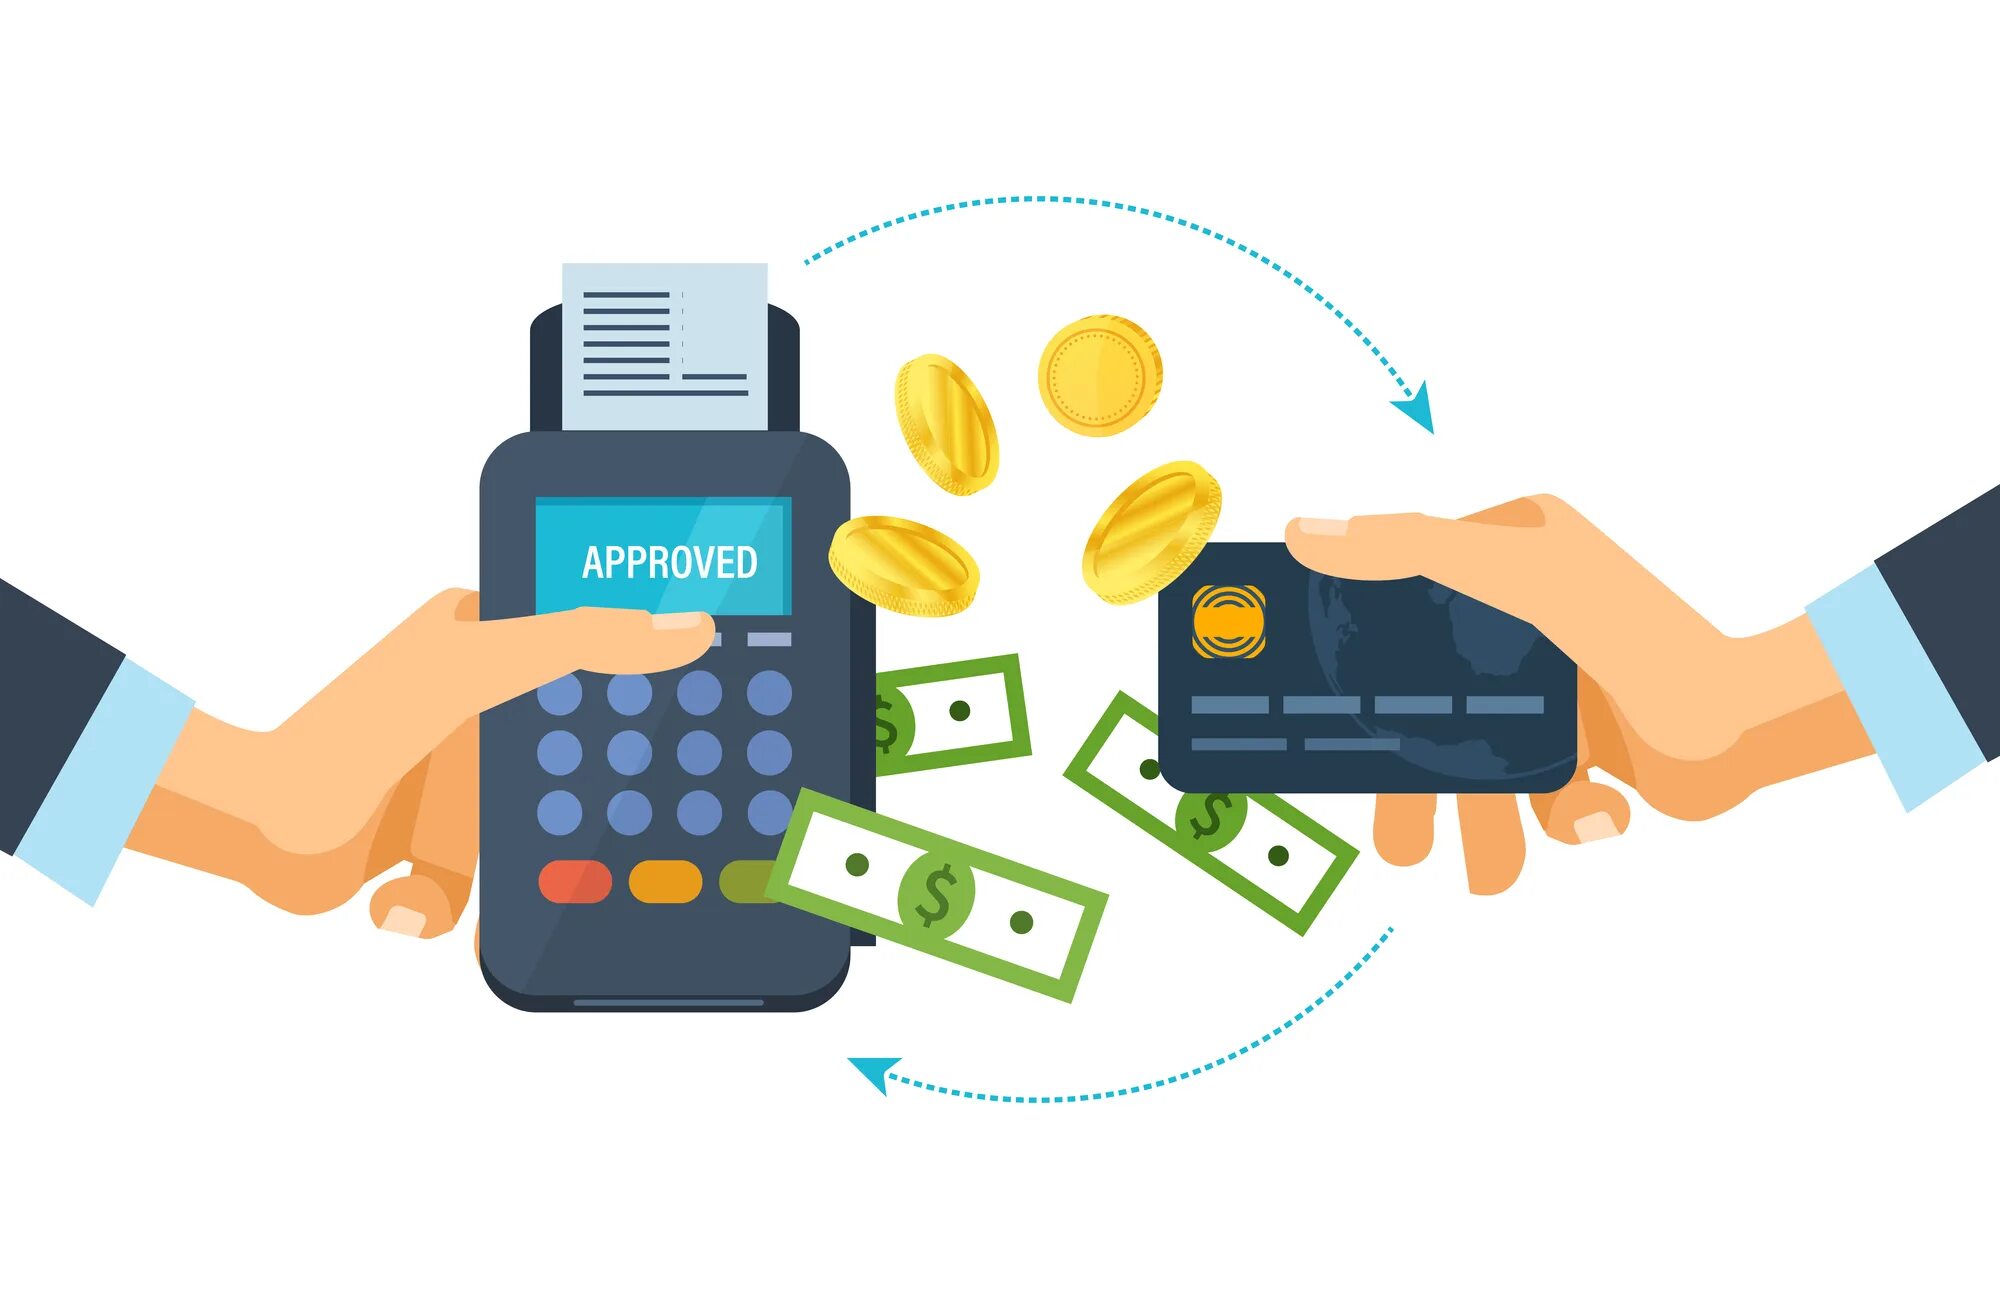 Paying methods. Система электронных платежей. Электронные платежные системы. Электронныелатежные системы. Цифровая платежная система.